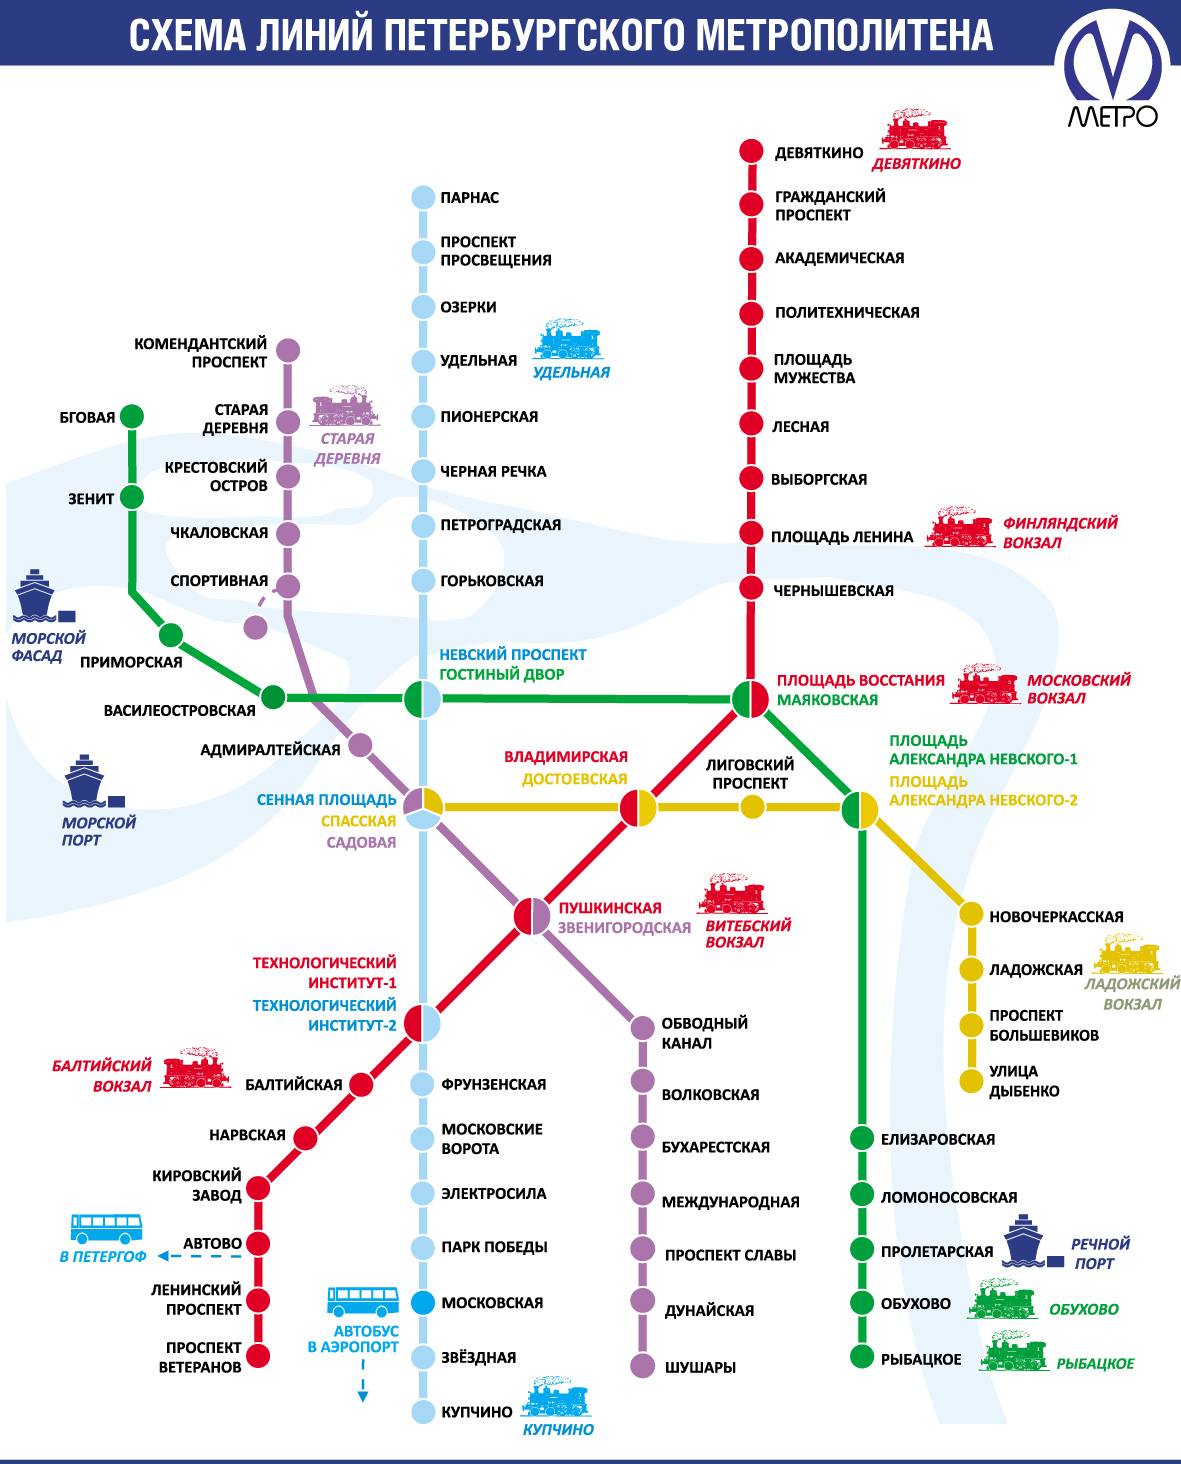 Метро зенит карта метро